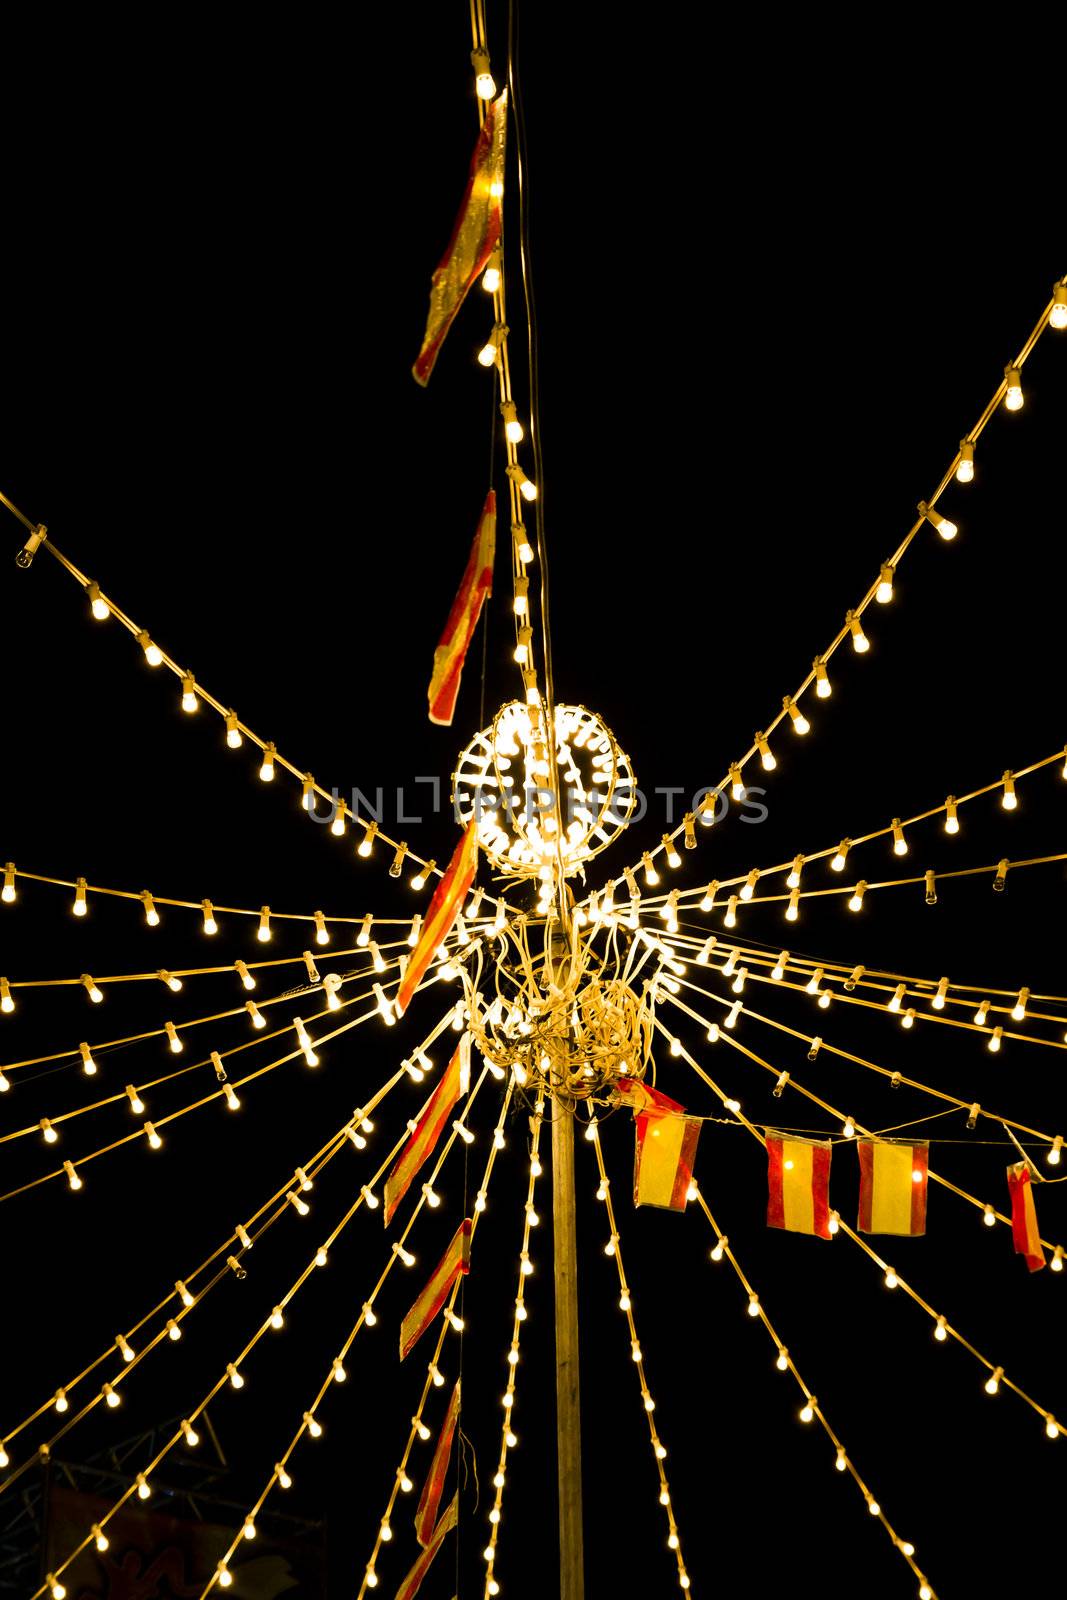 Lights festivities of Spain by FernandoCortes